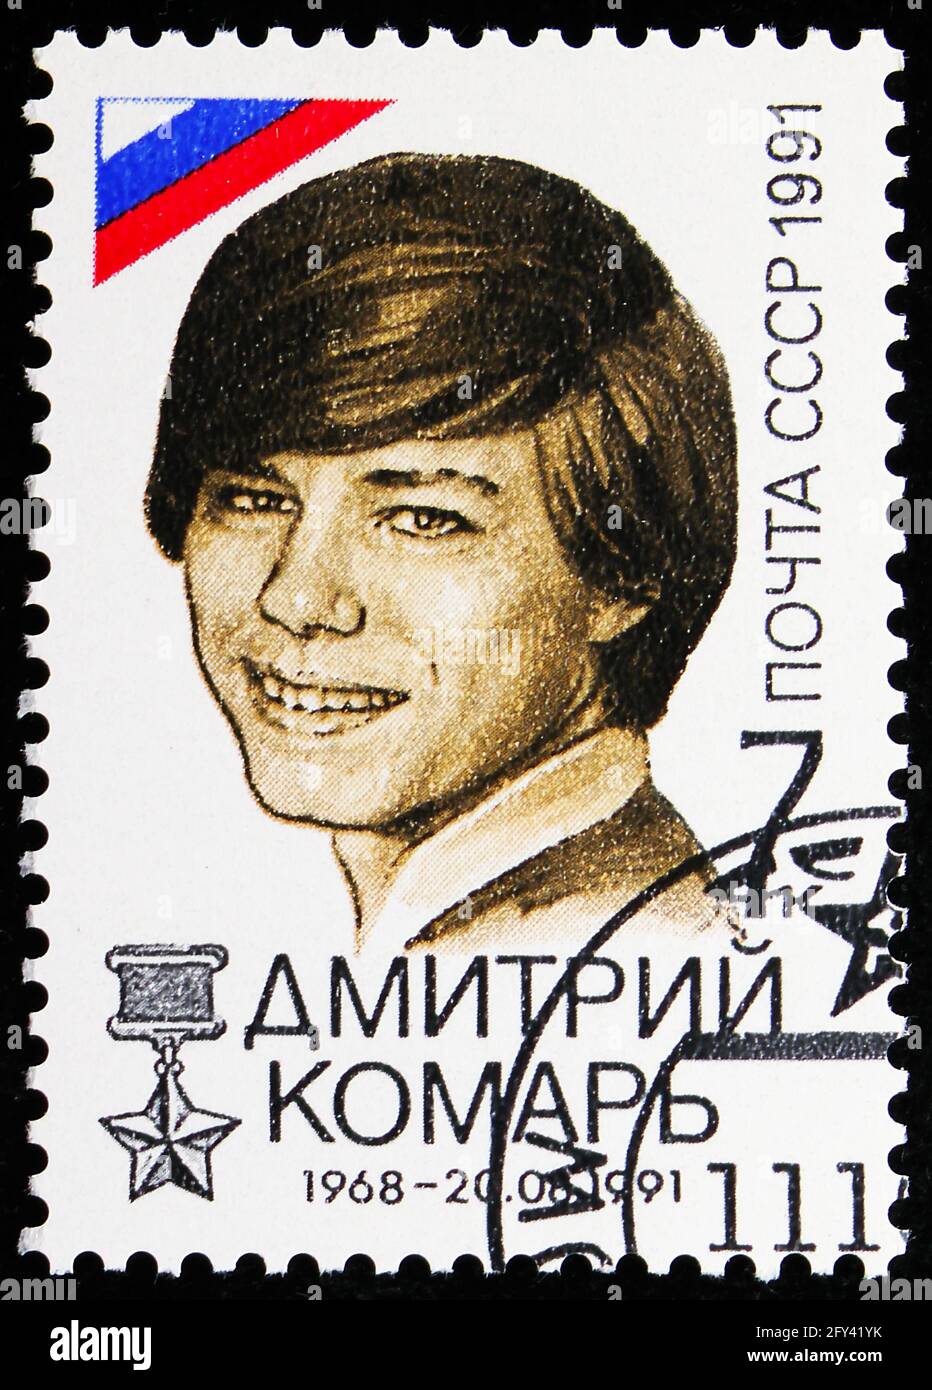 MOSCÚ, RUSIA - 31 DE AGOSTO de 2019: Sello postal impreso en la Unión Soviética (Rusia) muestra Dimitry Komar, derrota de intento de golpe de serie, alrededor de 1991 Foto de stock